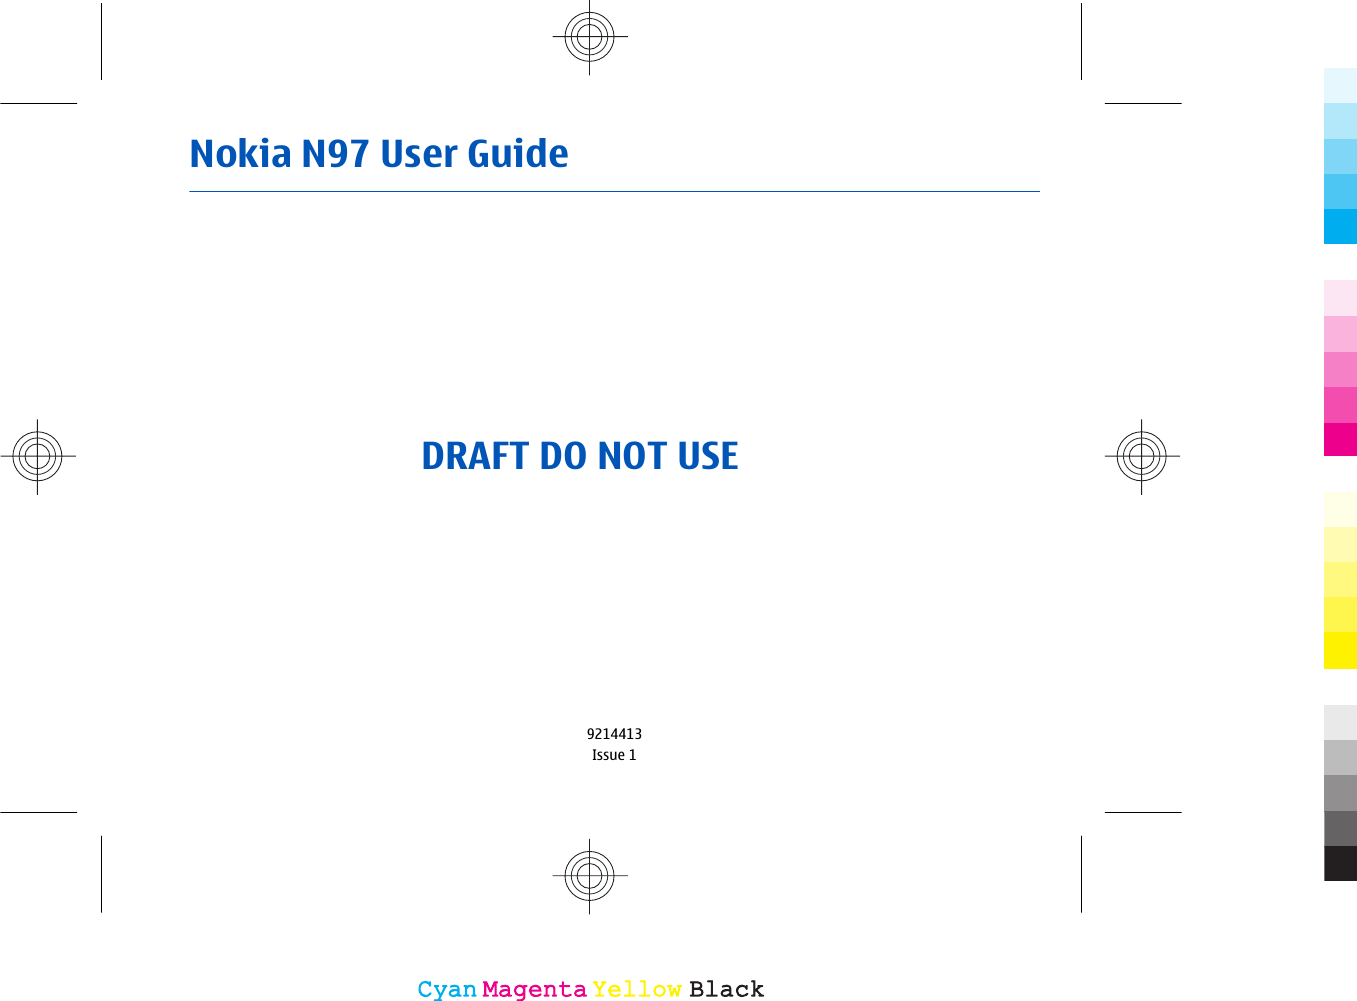 Nokia N97 User Guide9214413Issue 1CyanCyanMagentaMagentaYellowYellowBlackBlackDRAFT DO NOT USE